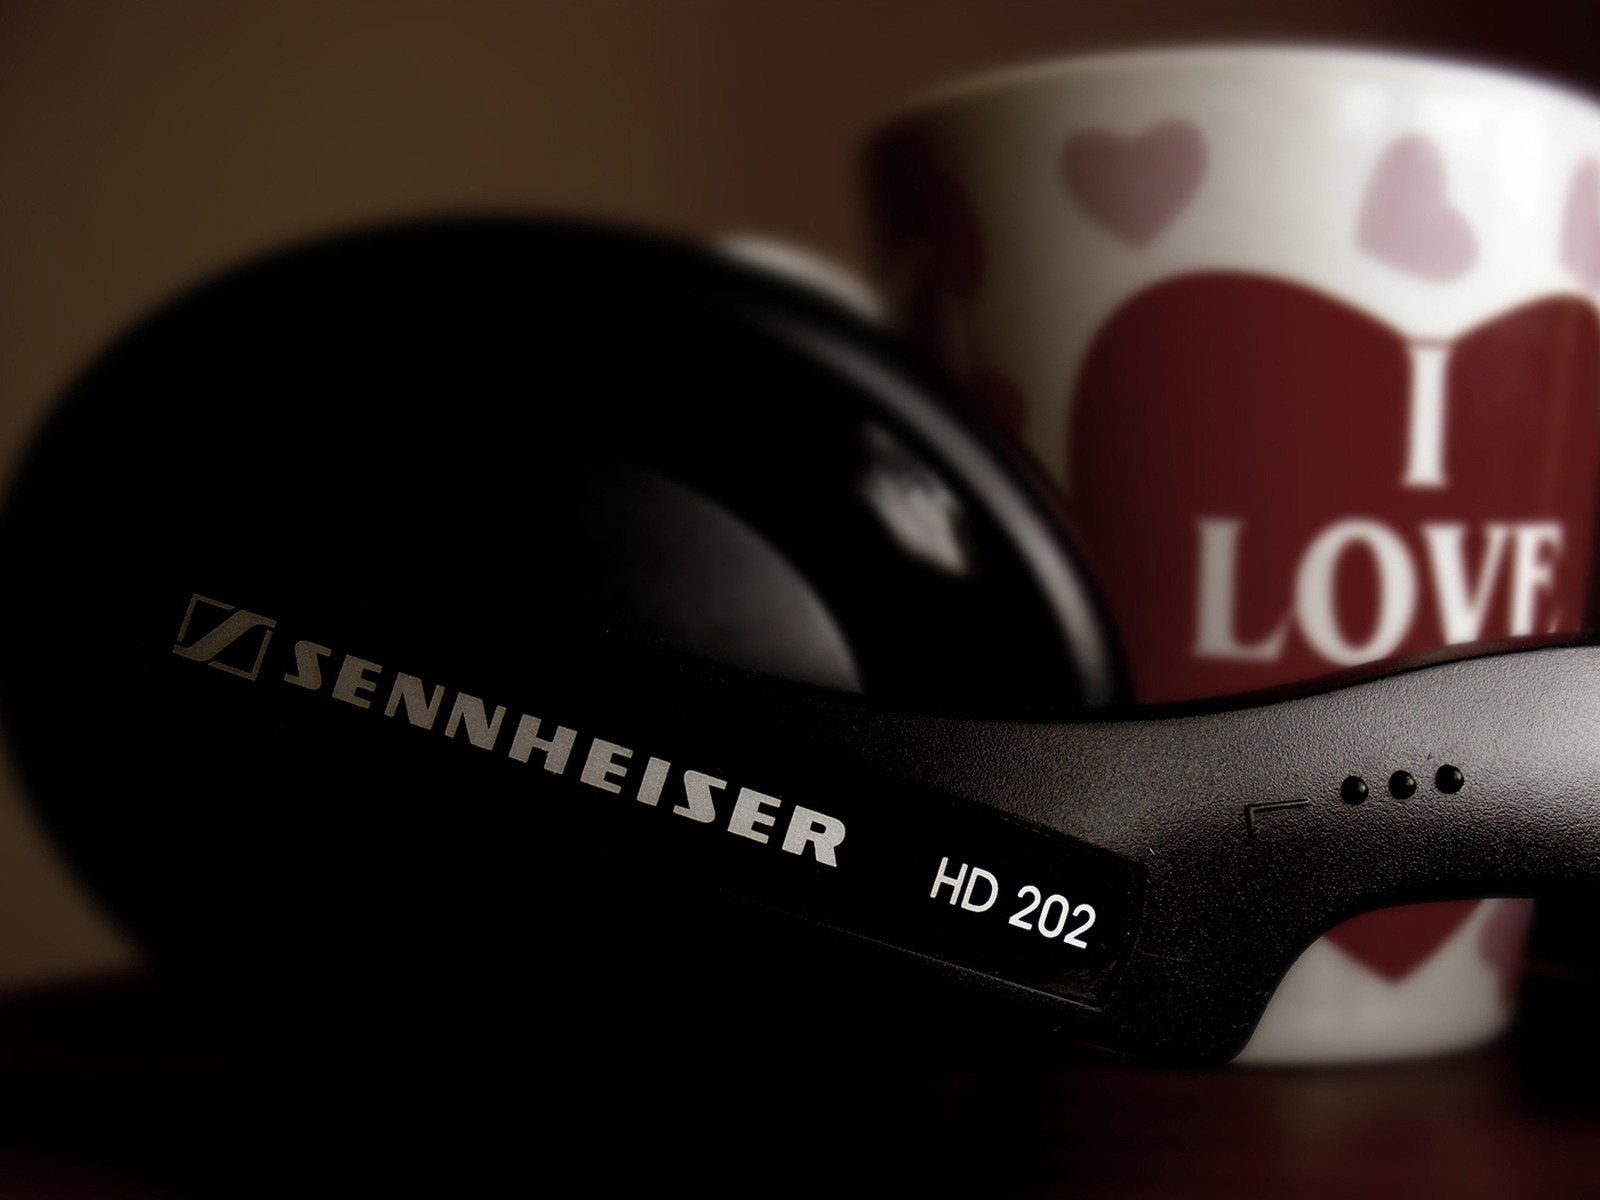 Sennheiser HD 202 for 1600 x 1200 resolution